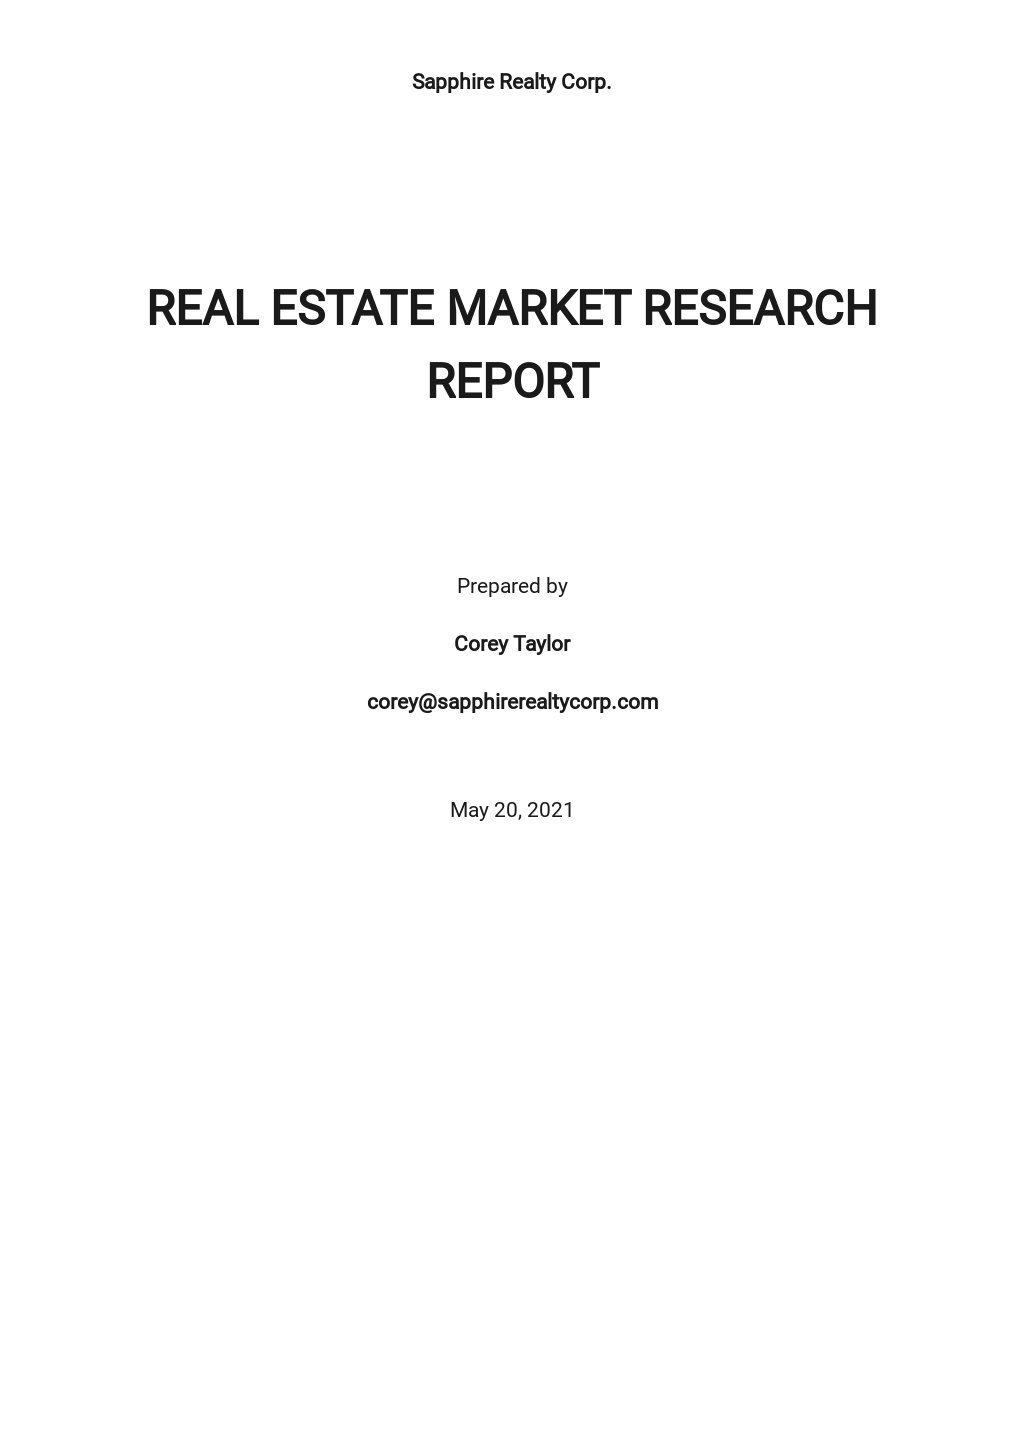 Market Research Report Template - Google Docs, Word  Template.net Throughout Market Research Report Template